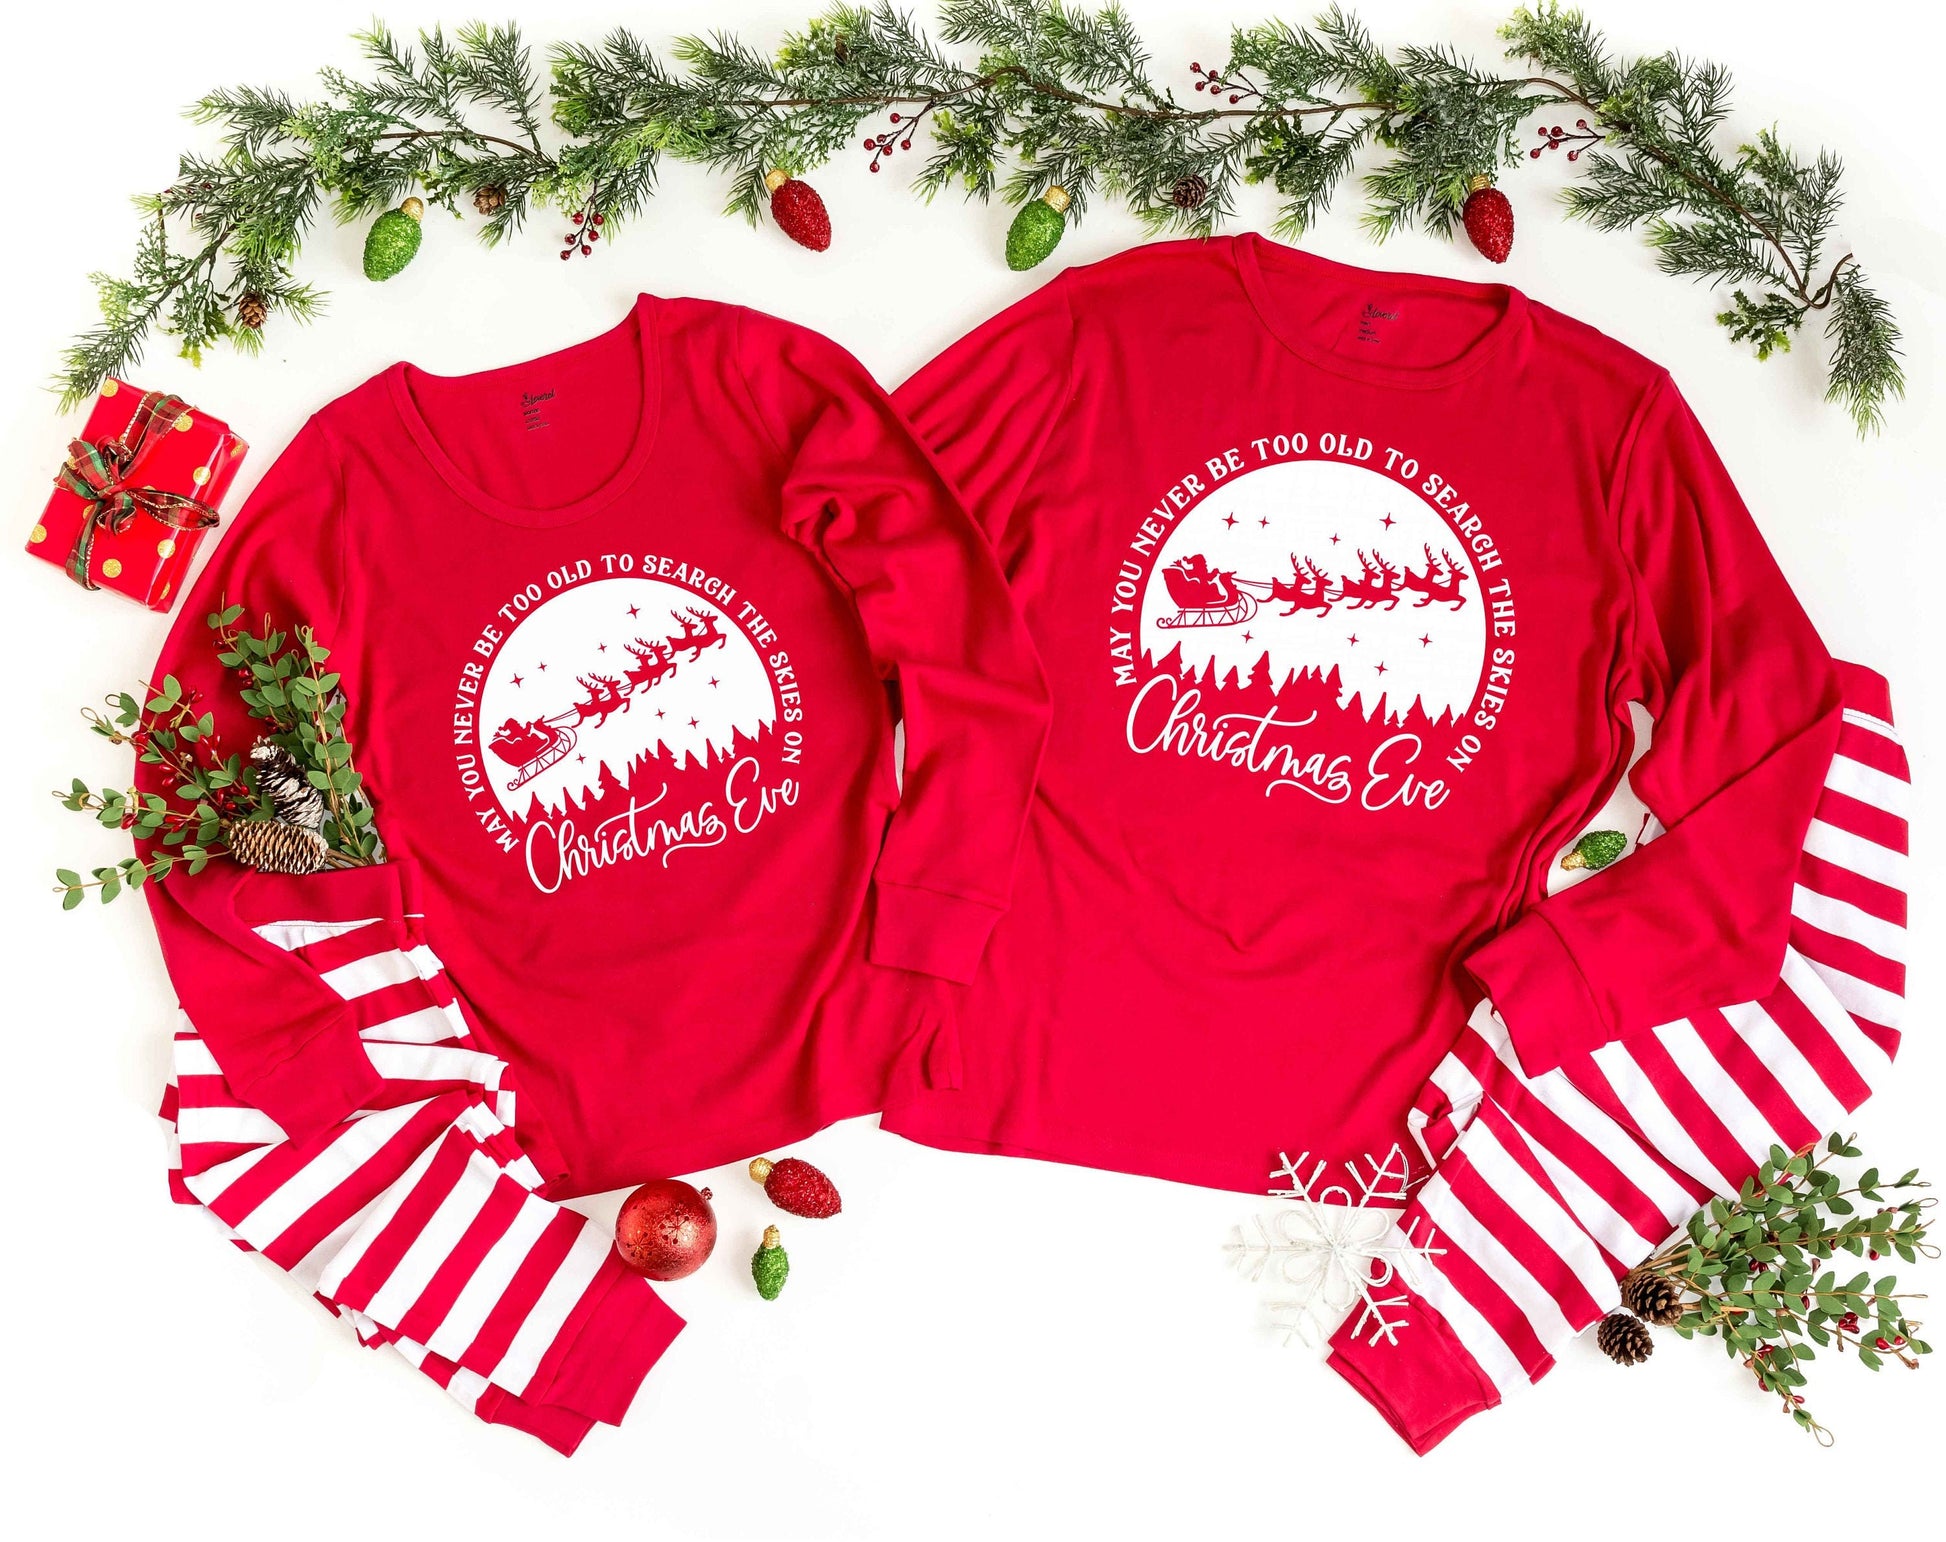 Christmas Pajamas May You Never Be Too Old to Search the Skies on Christmas Eve - Family Christmas Eve PJs